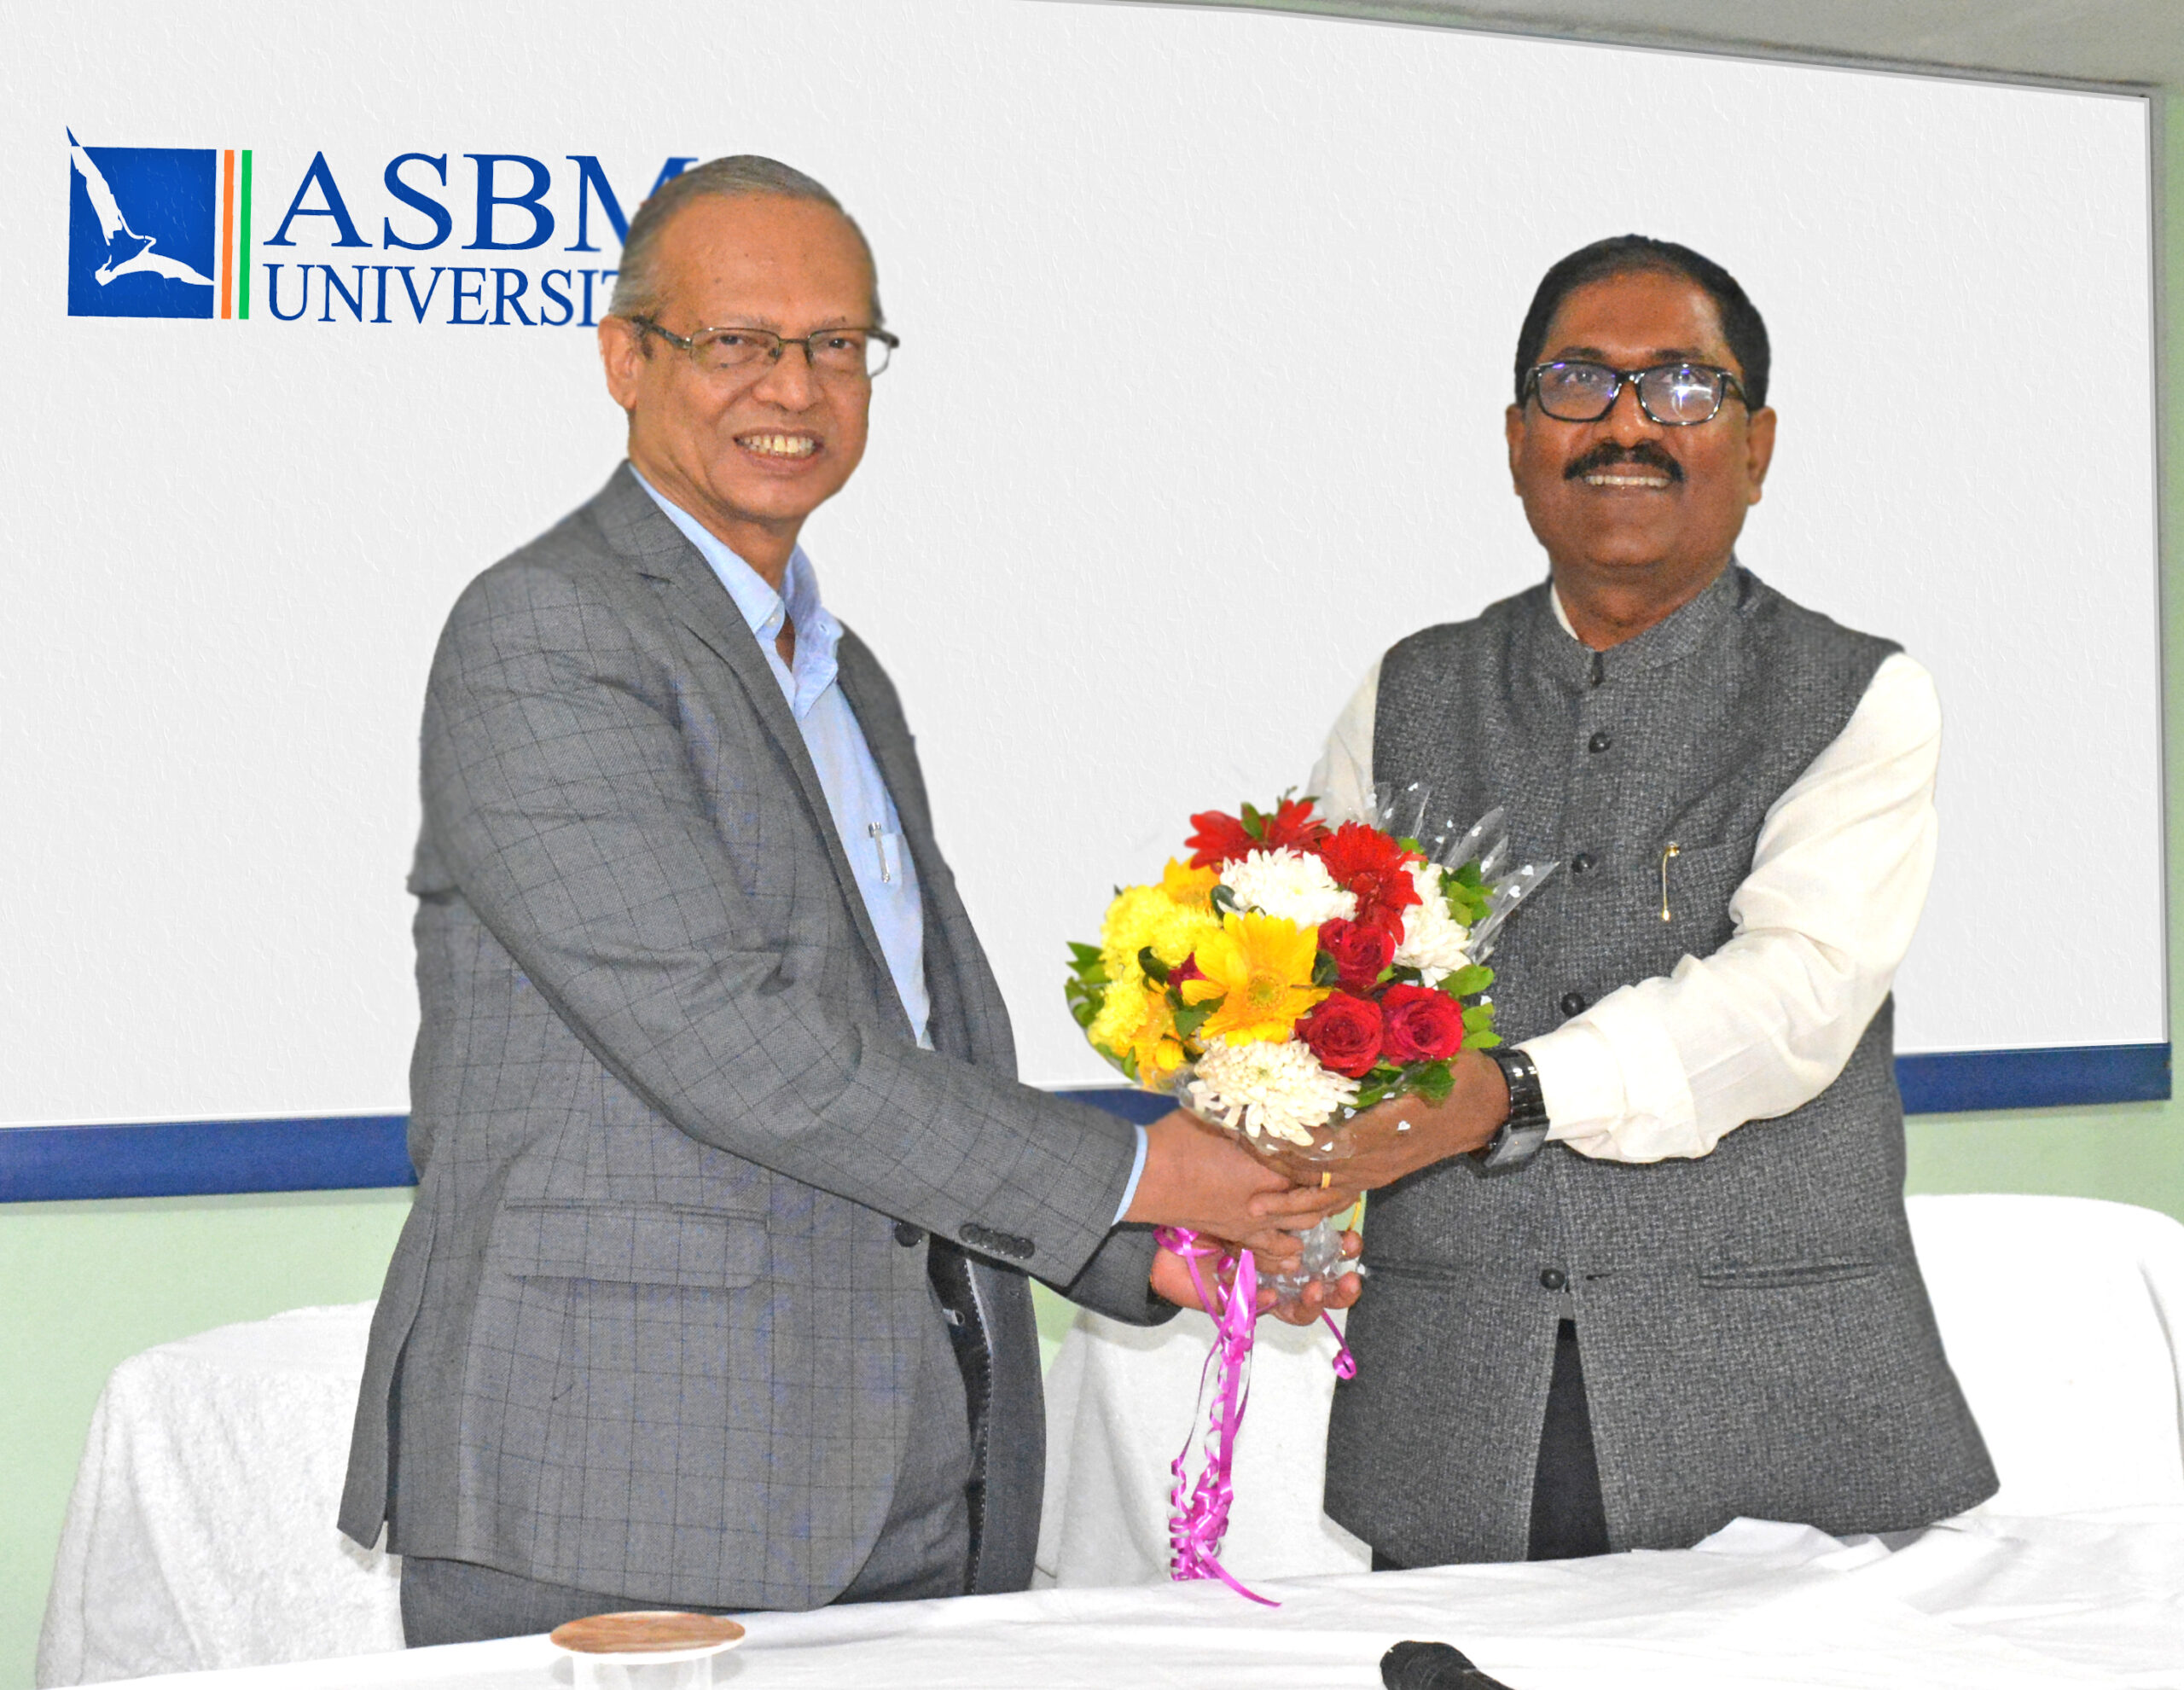 Prof. Ranjan Bal vice-chancellor of ASBM University